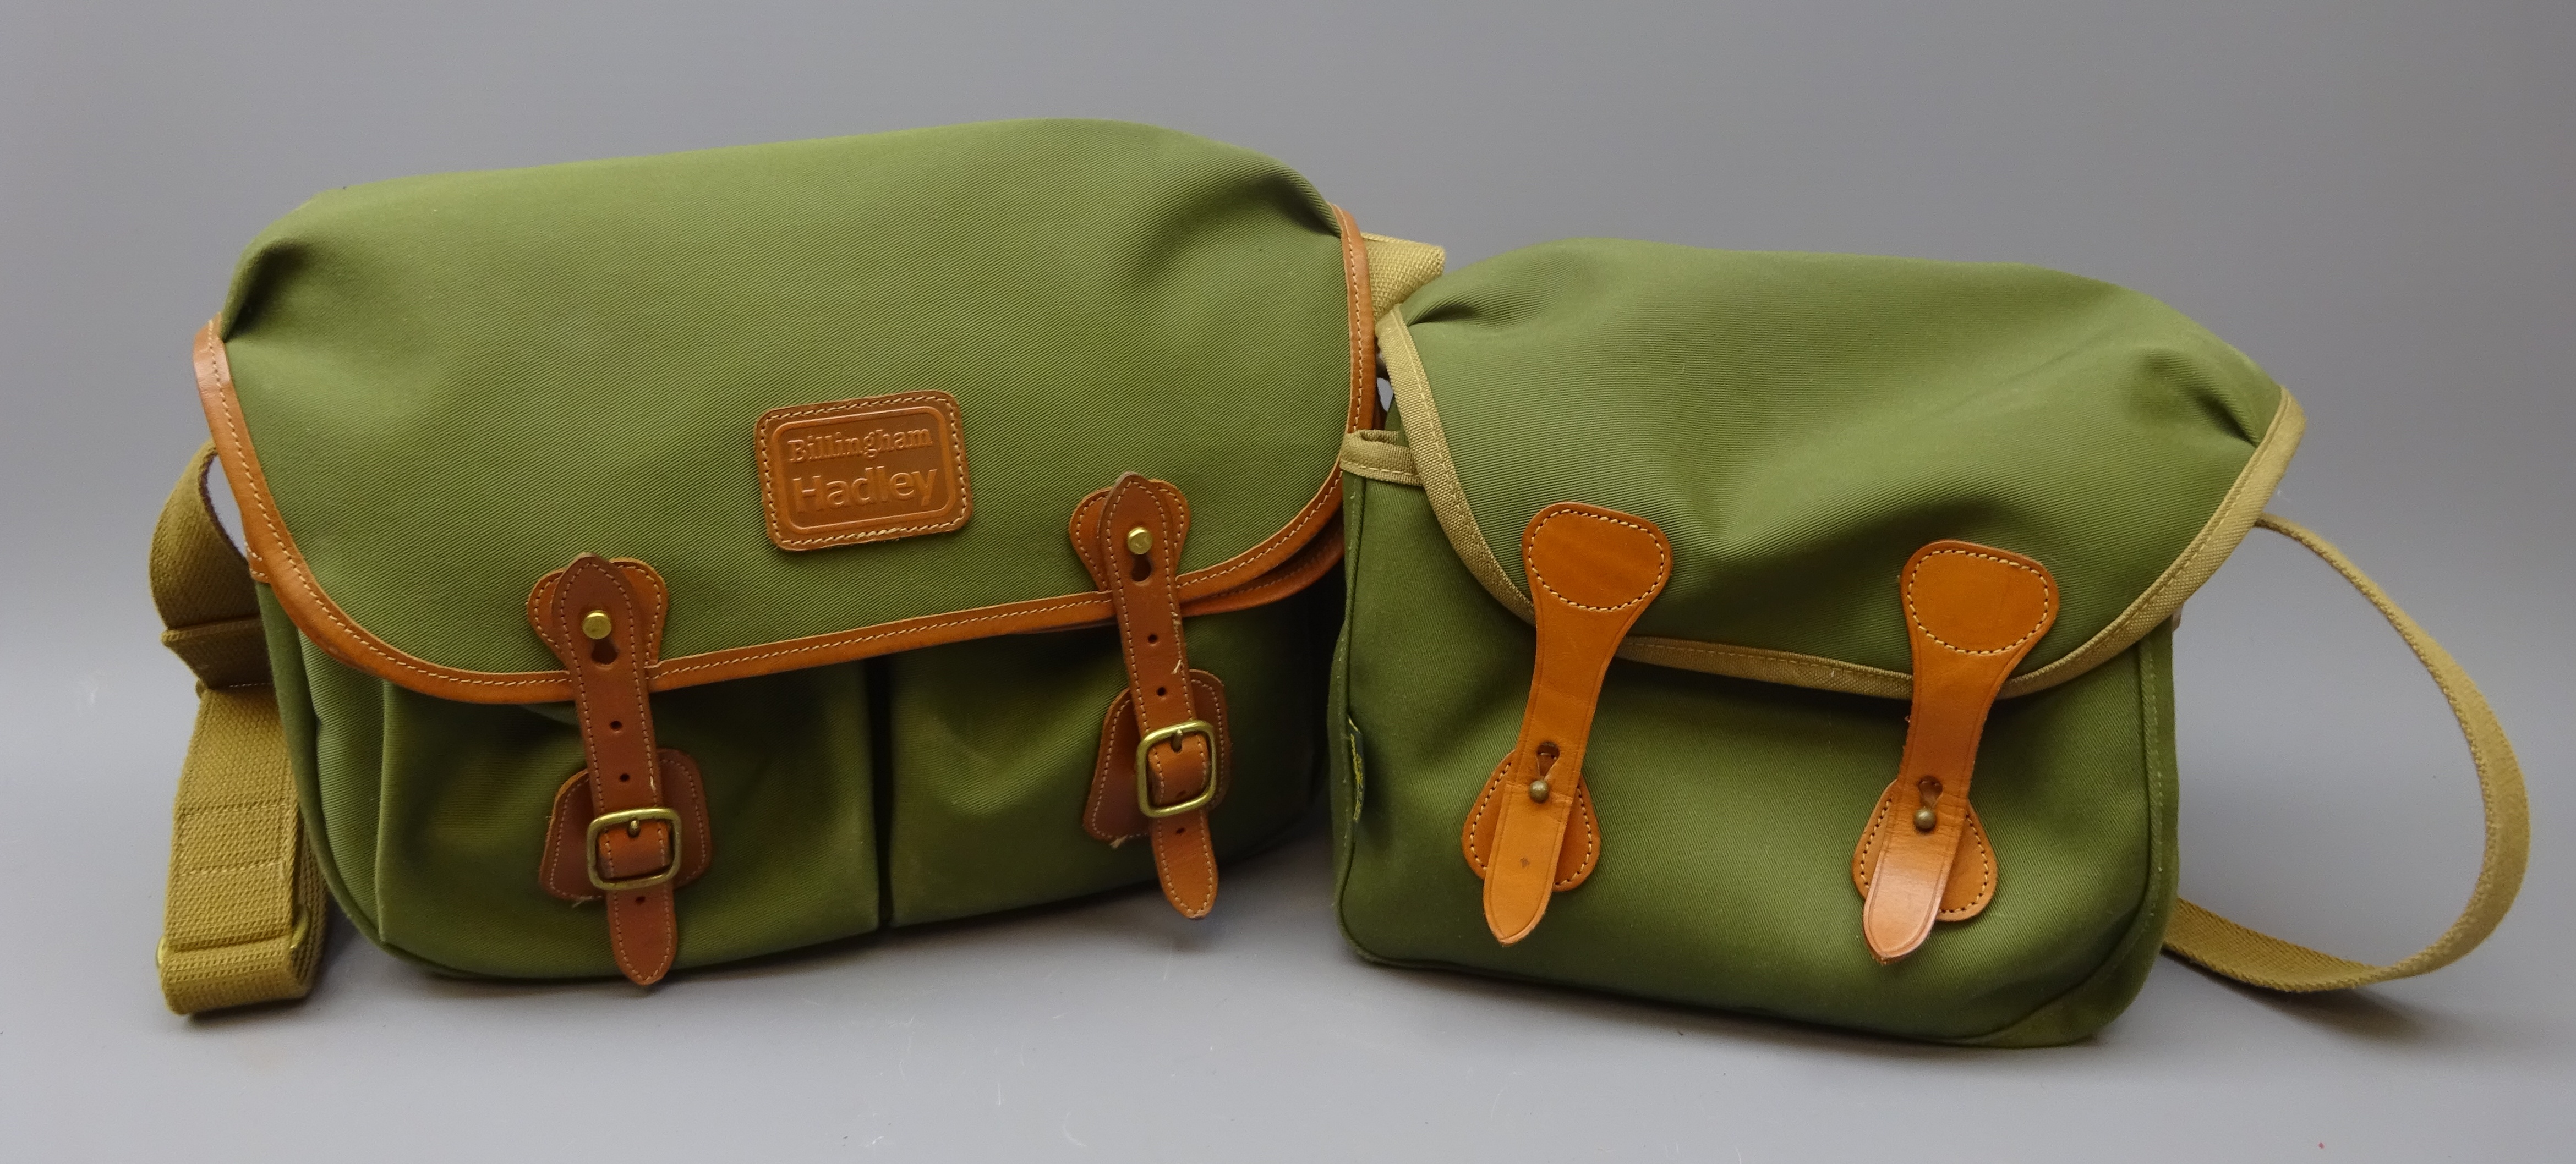 Billingham Hadley sage green & tan leather camera bag and The Billingham f6.